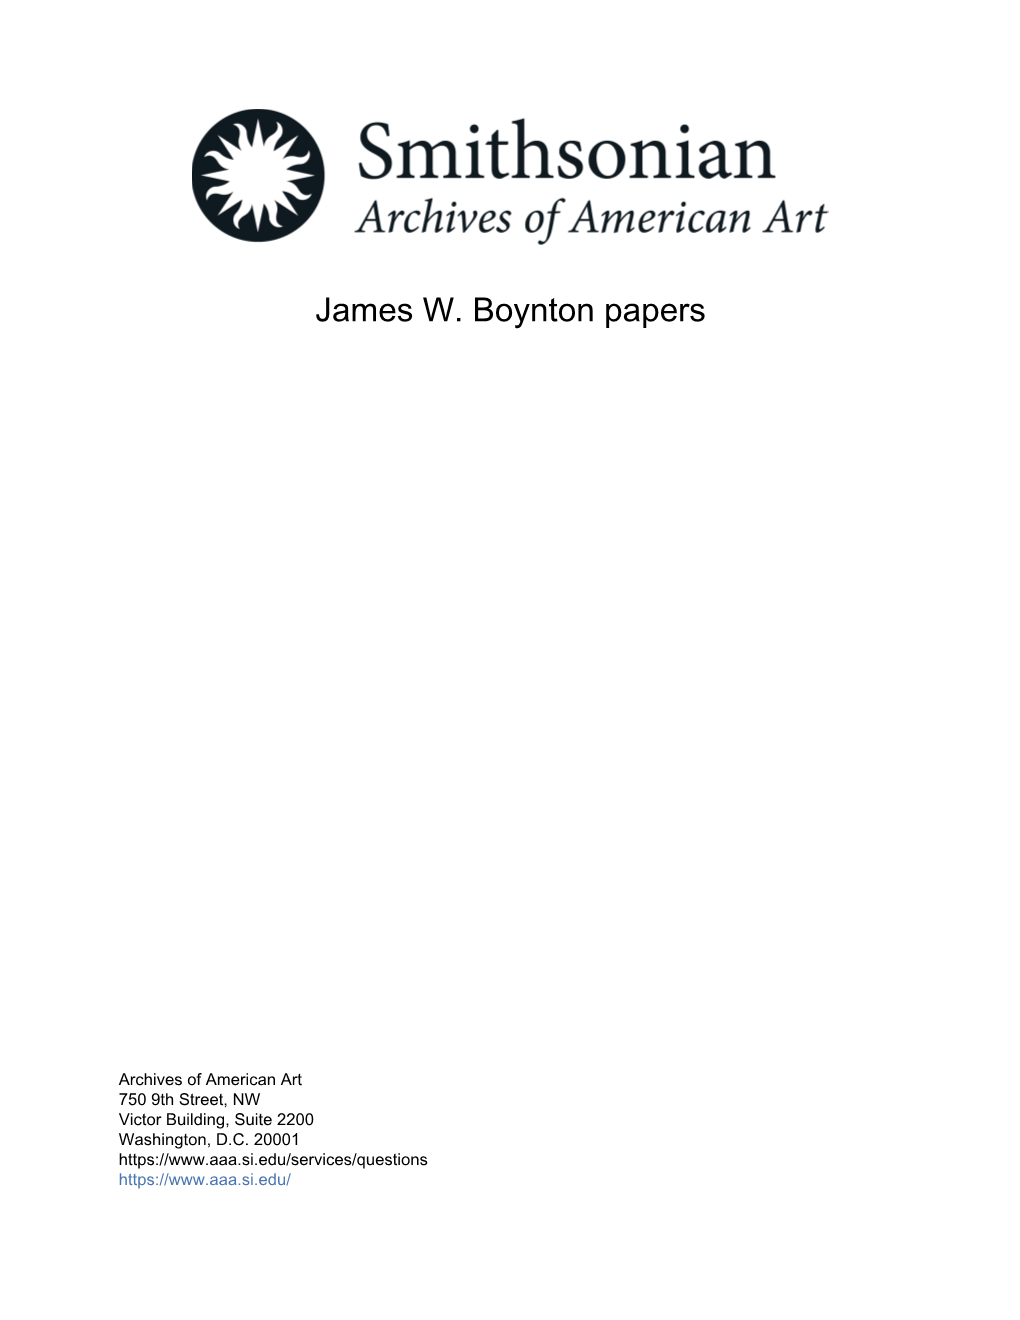 James W. Boynton Papers